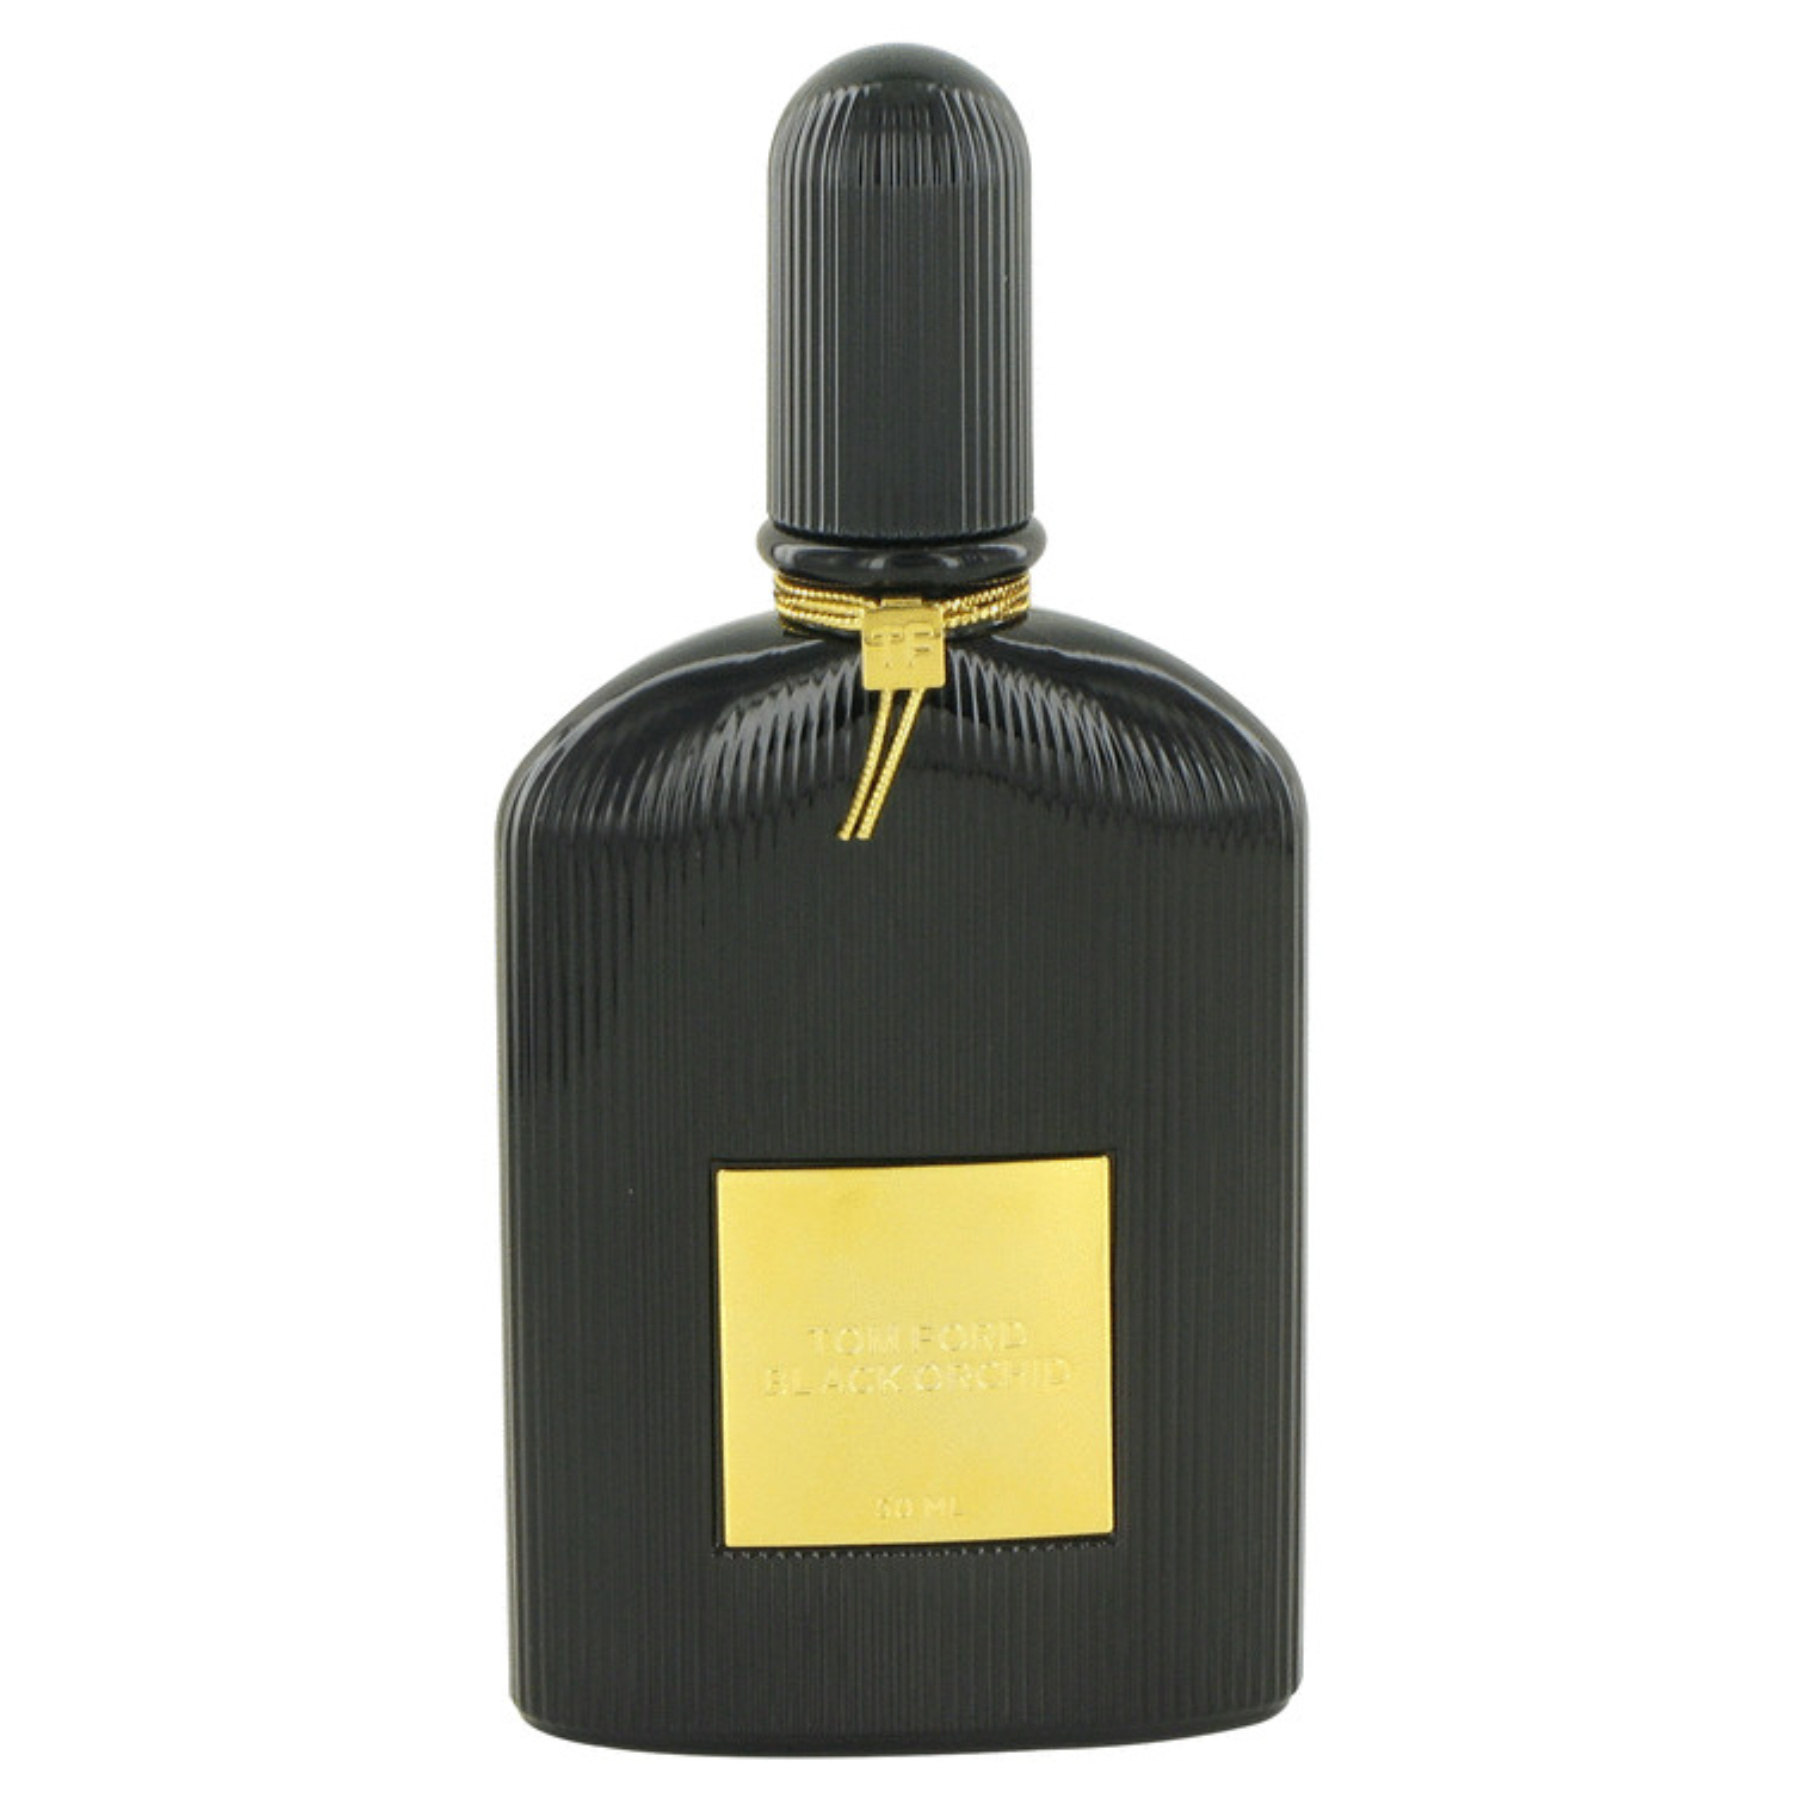 Tom ford black orchid eau de parfum spray 3.4 oz #8